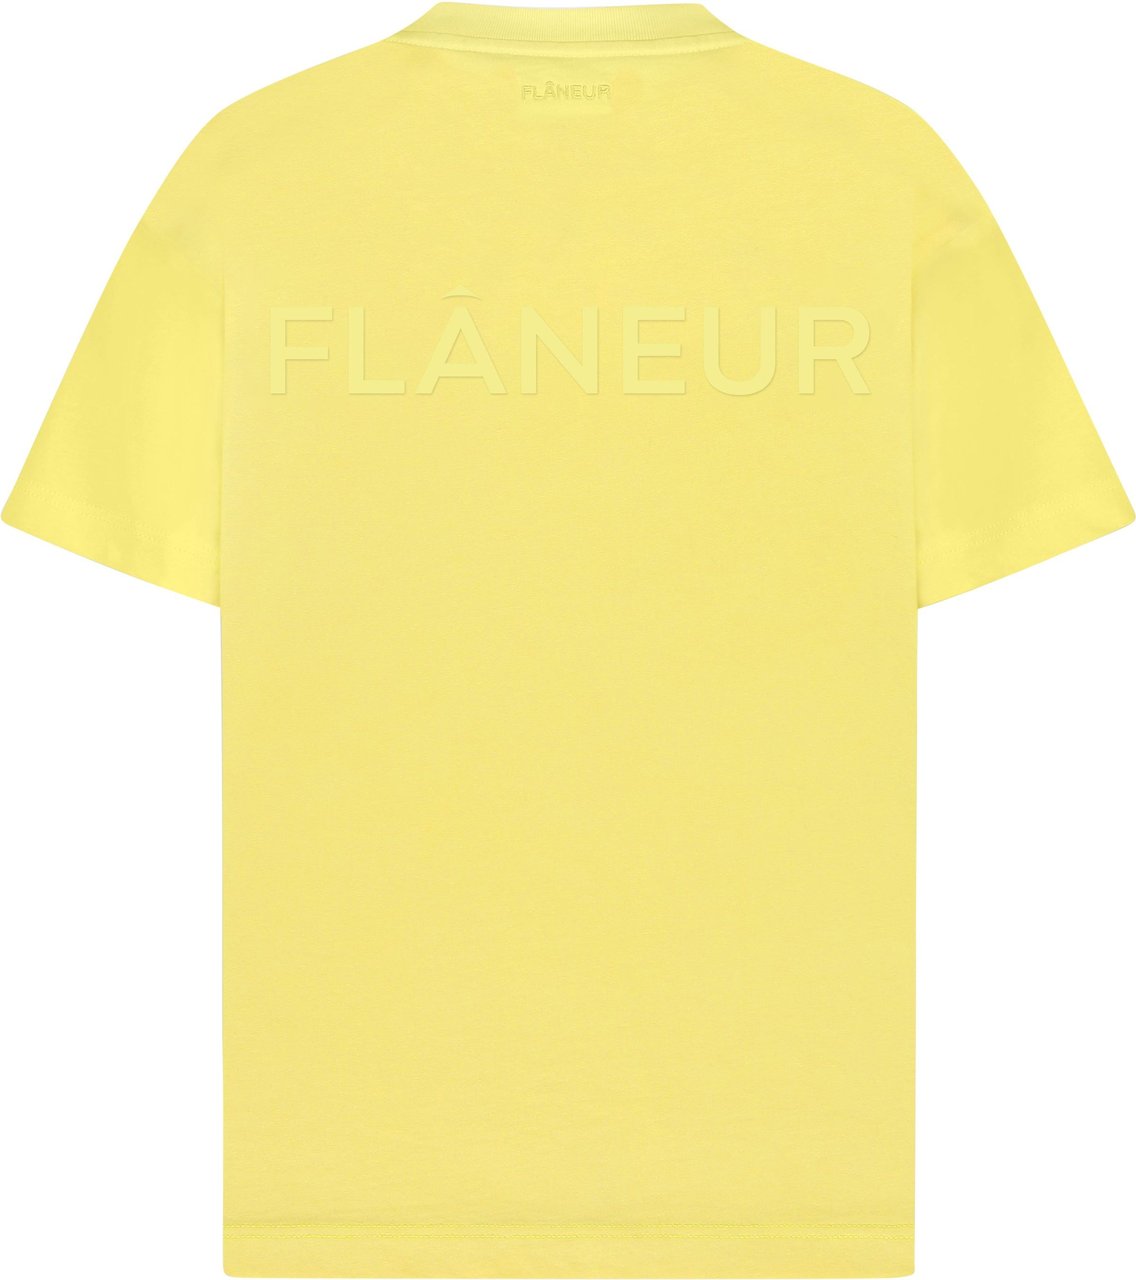 FLÂNEUR Tonal Logo T-Shirt Yellow Geel